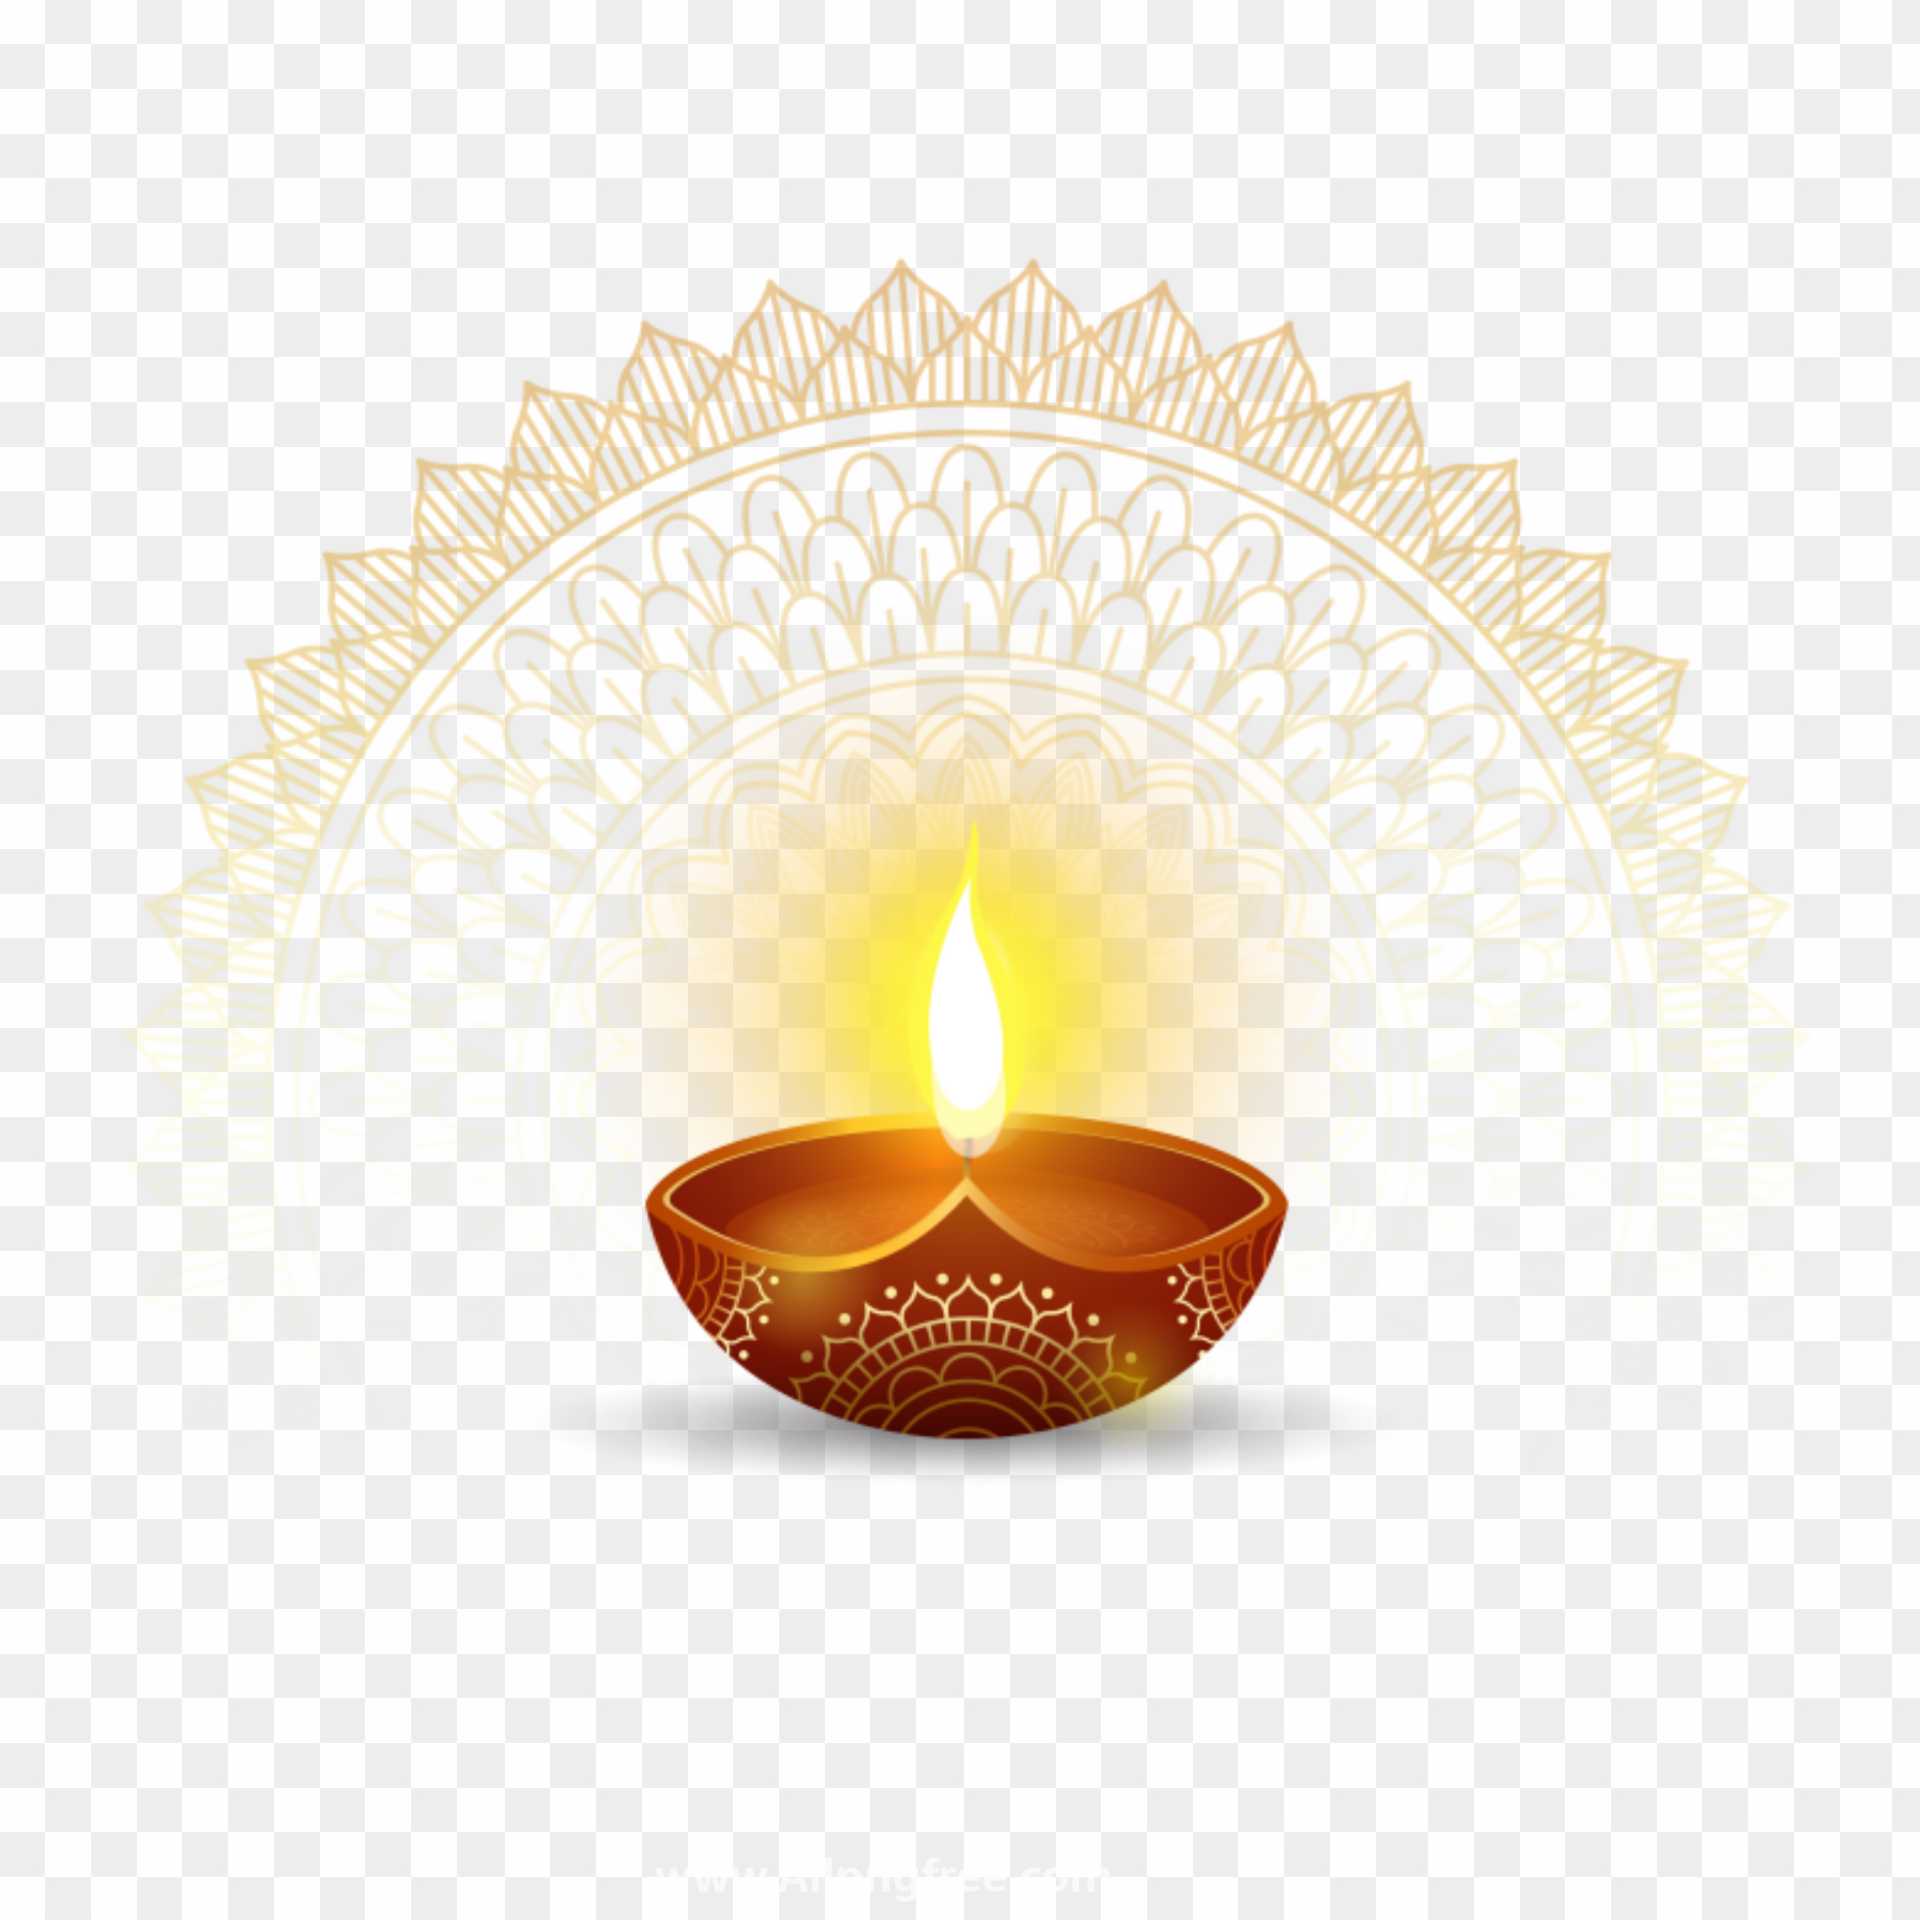 Diwali transparent image